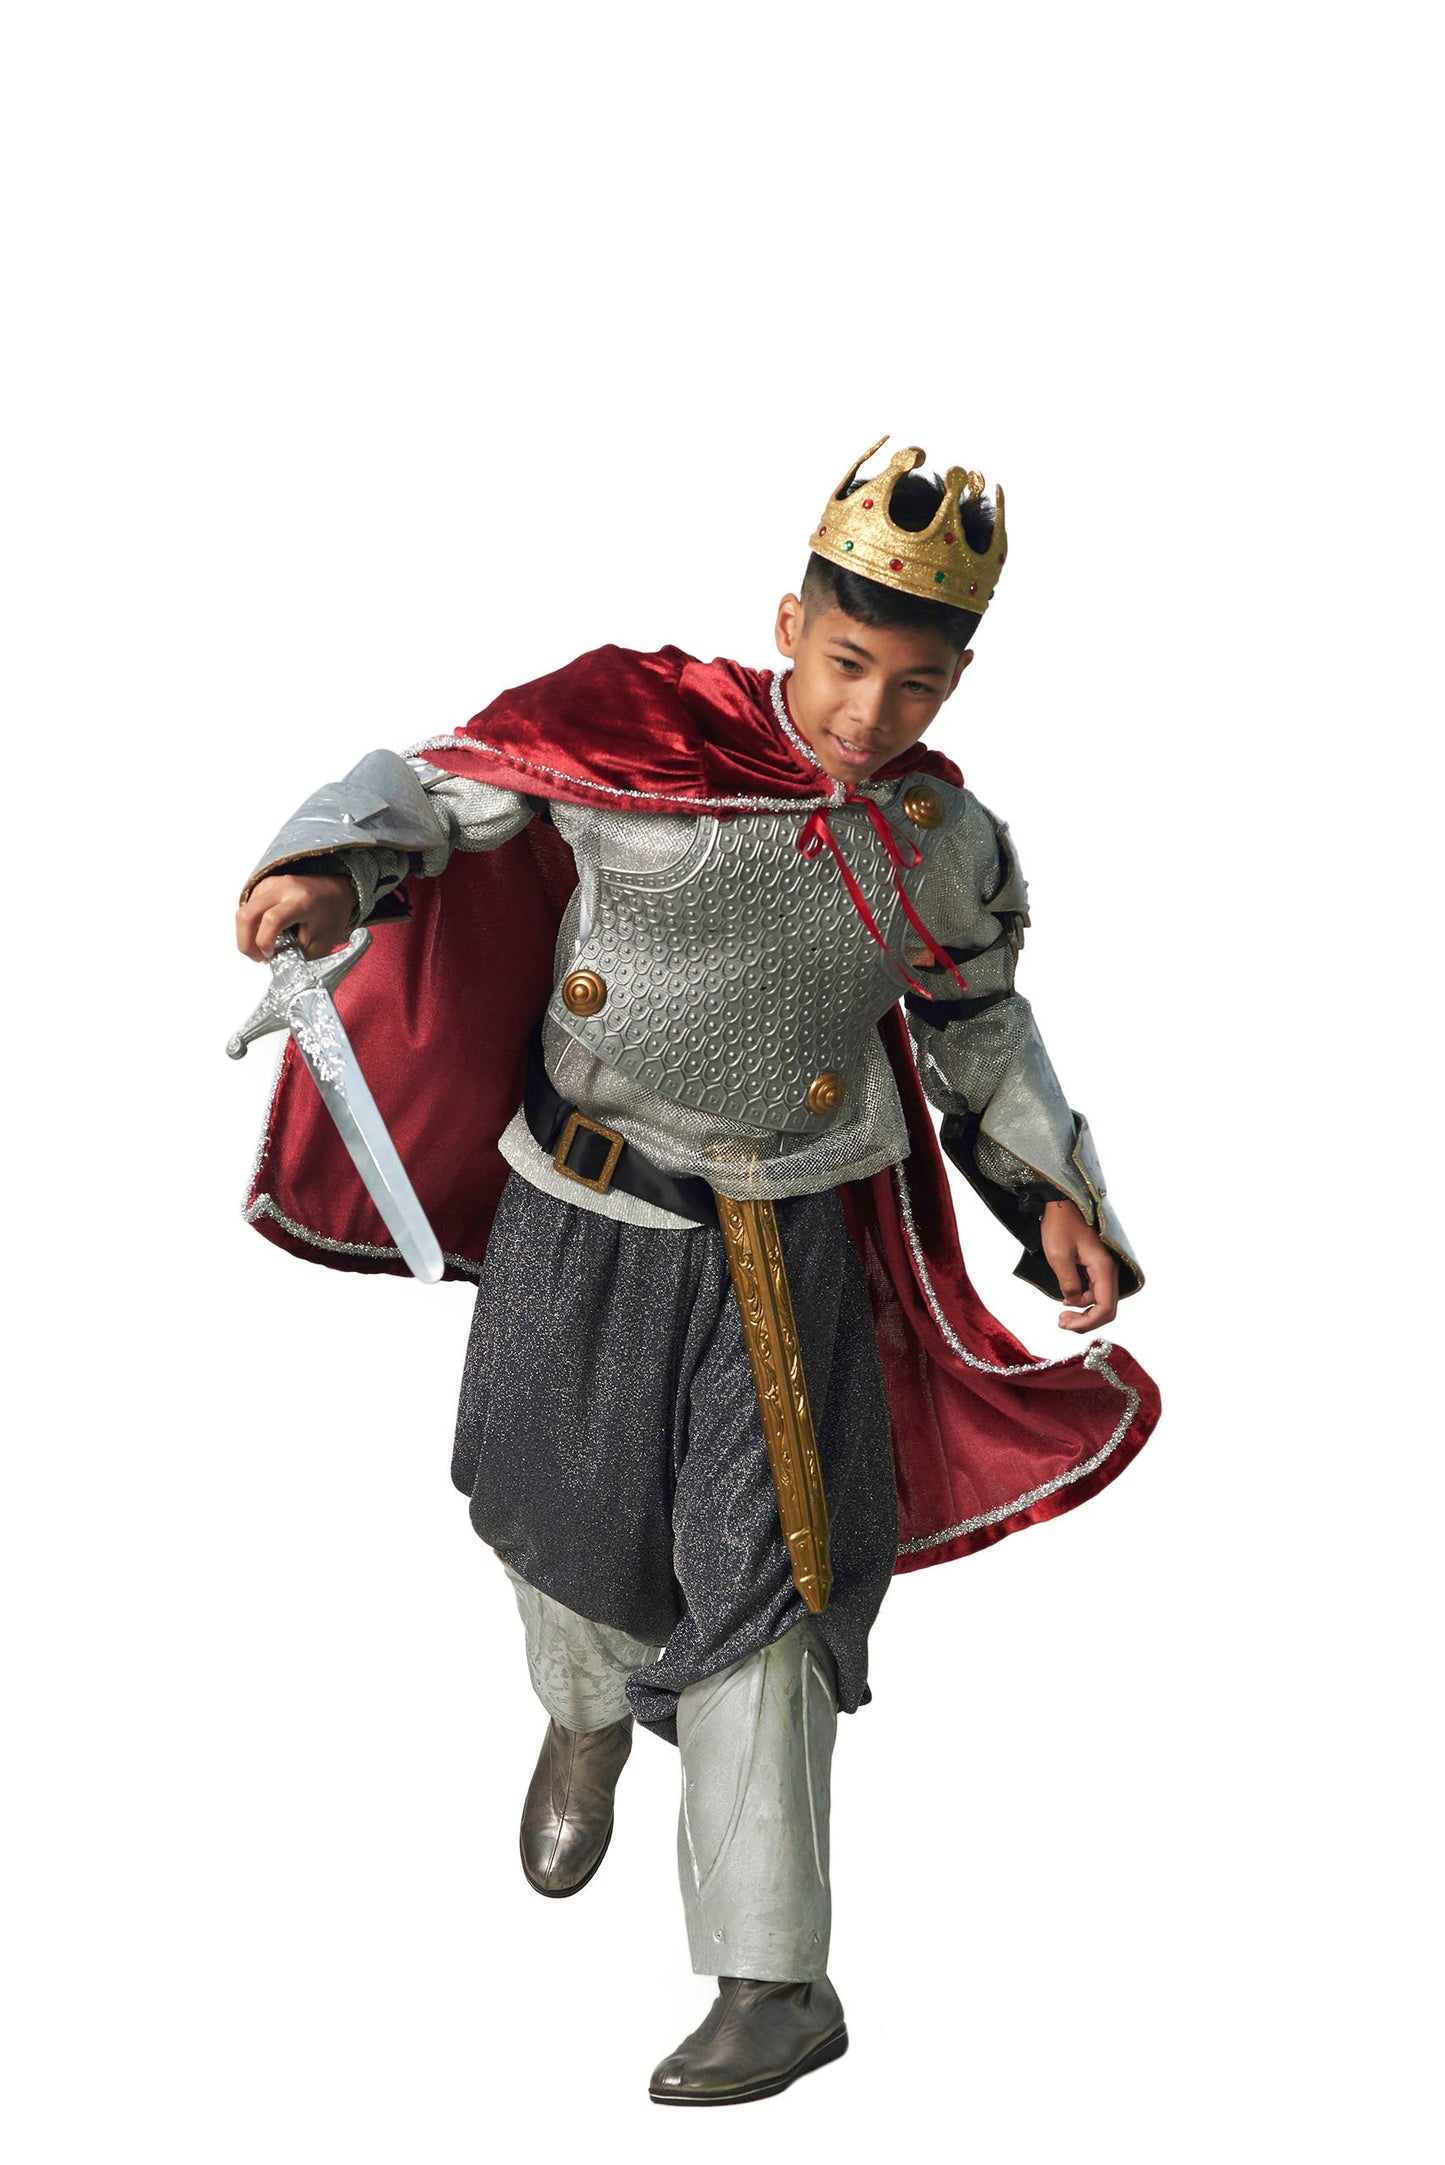 Raja Abad Pertengahan K01